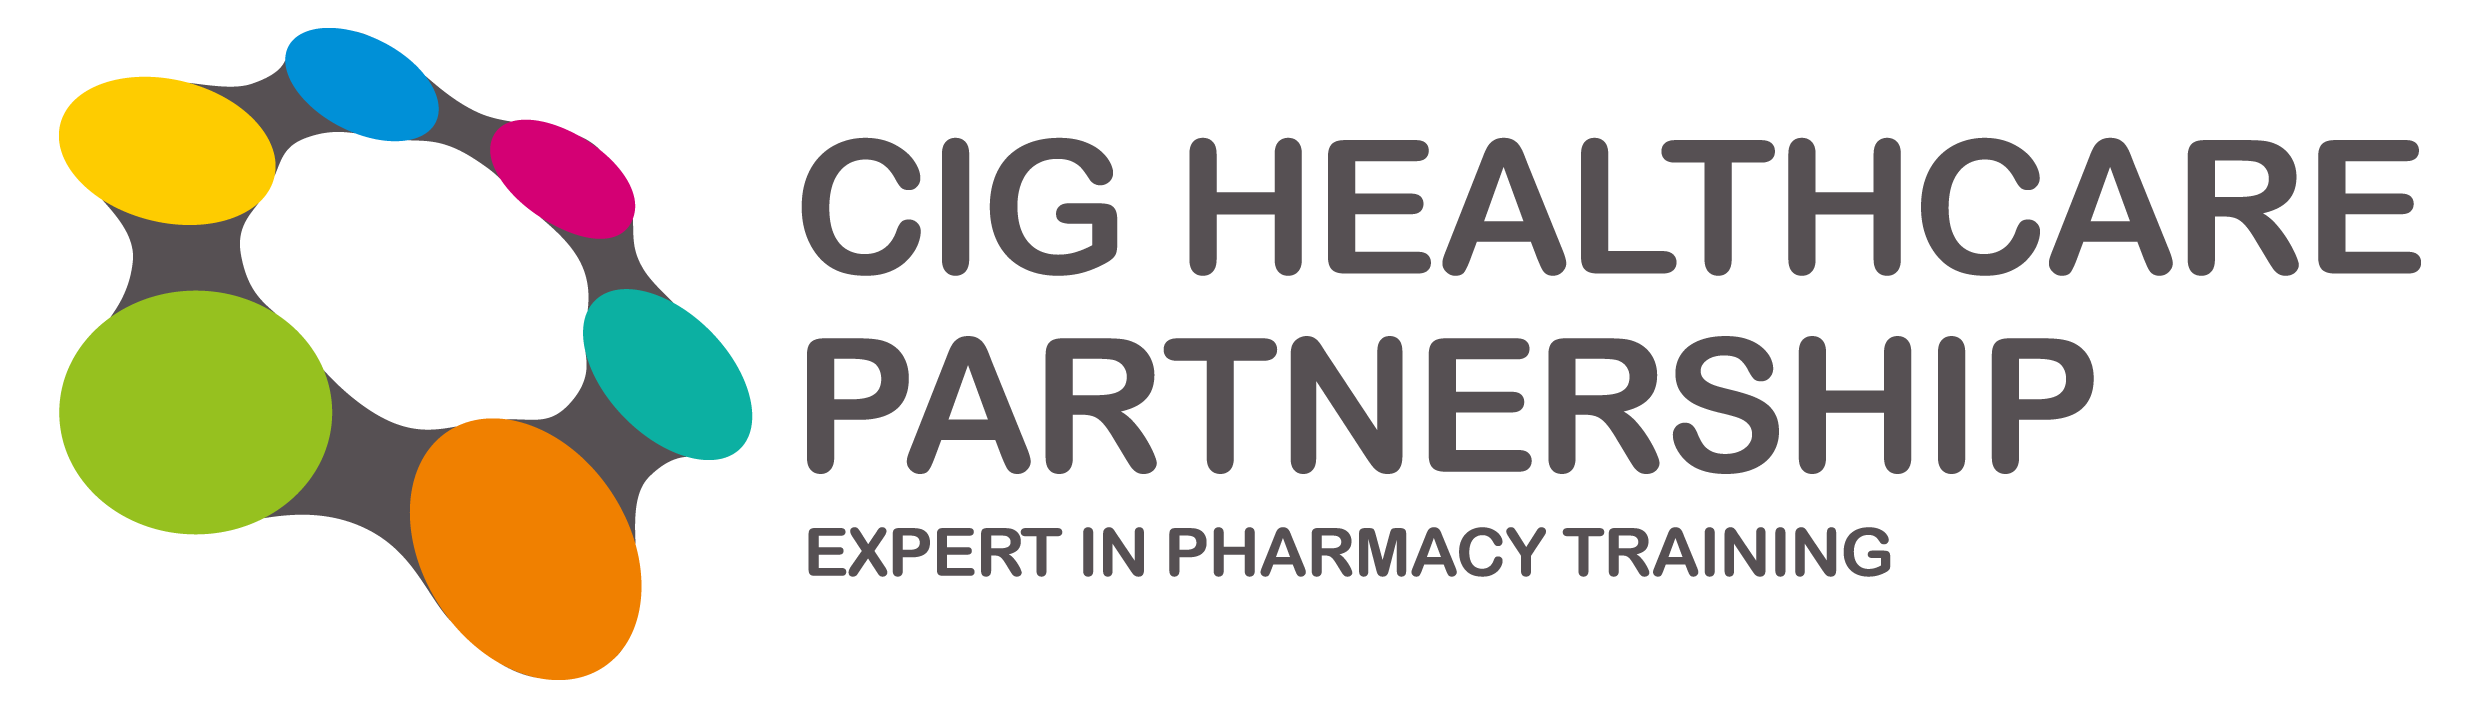 CIG Healthcare Partnership